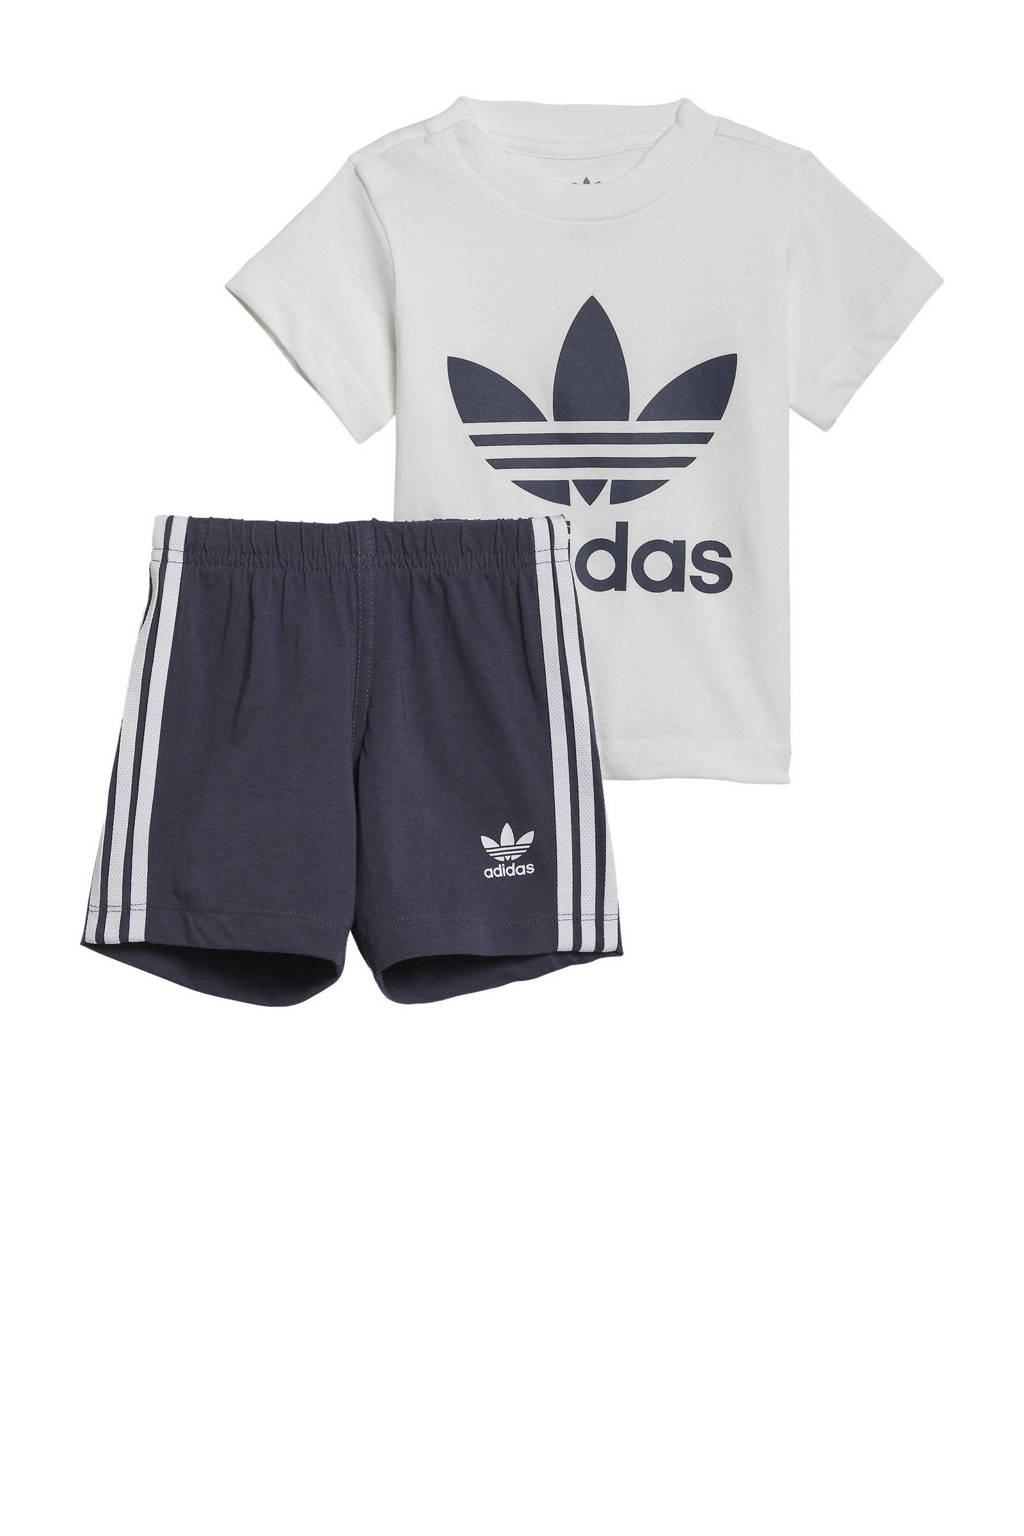 adidas Originals   Adicolor T-shirt en short wit/donkerblauw, Wit/donkerblauw